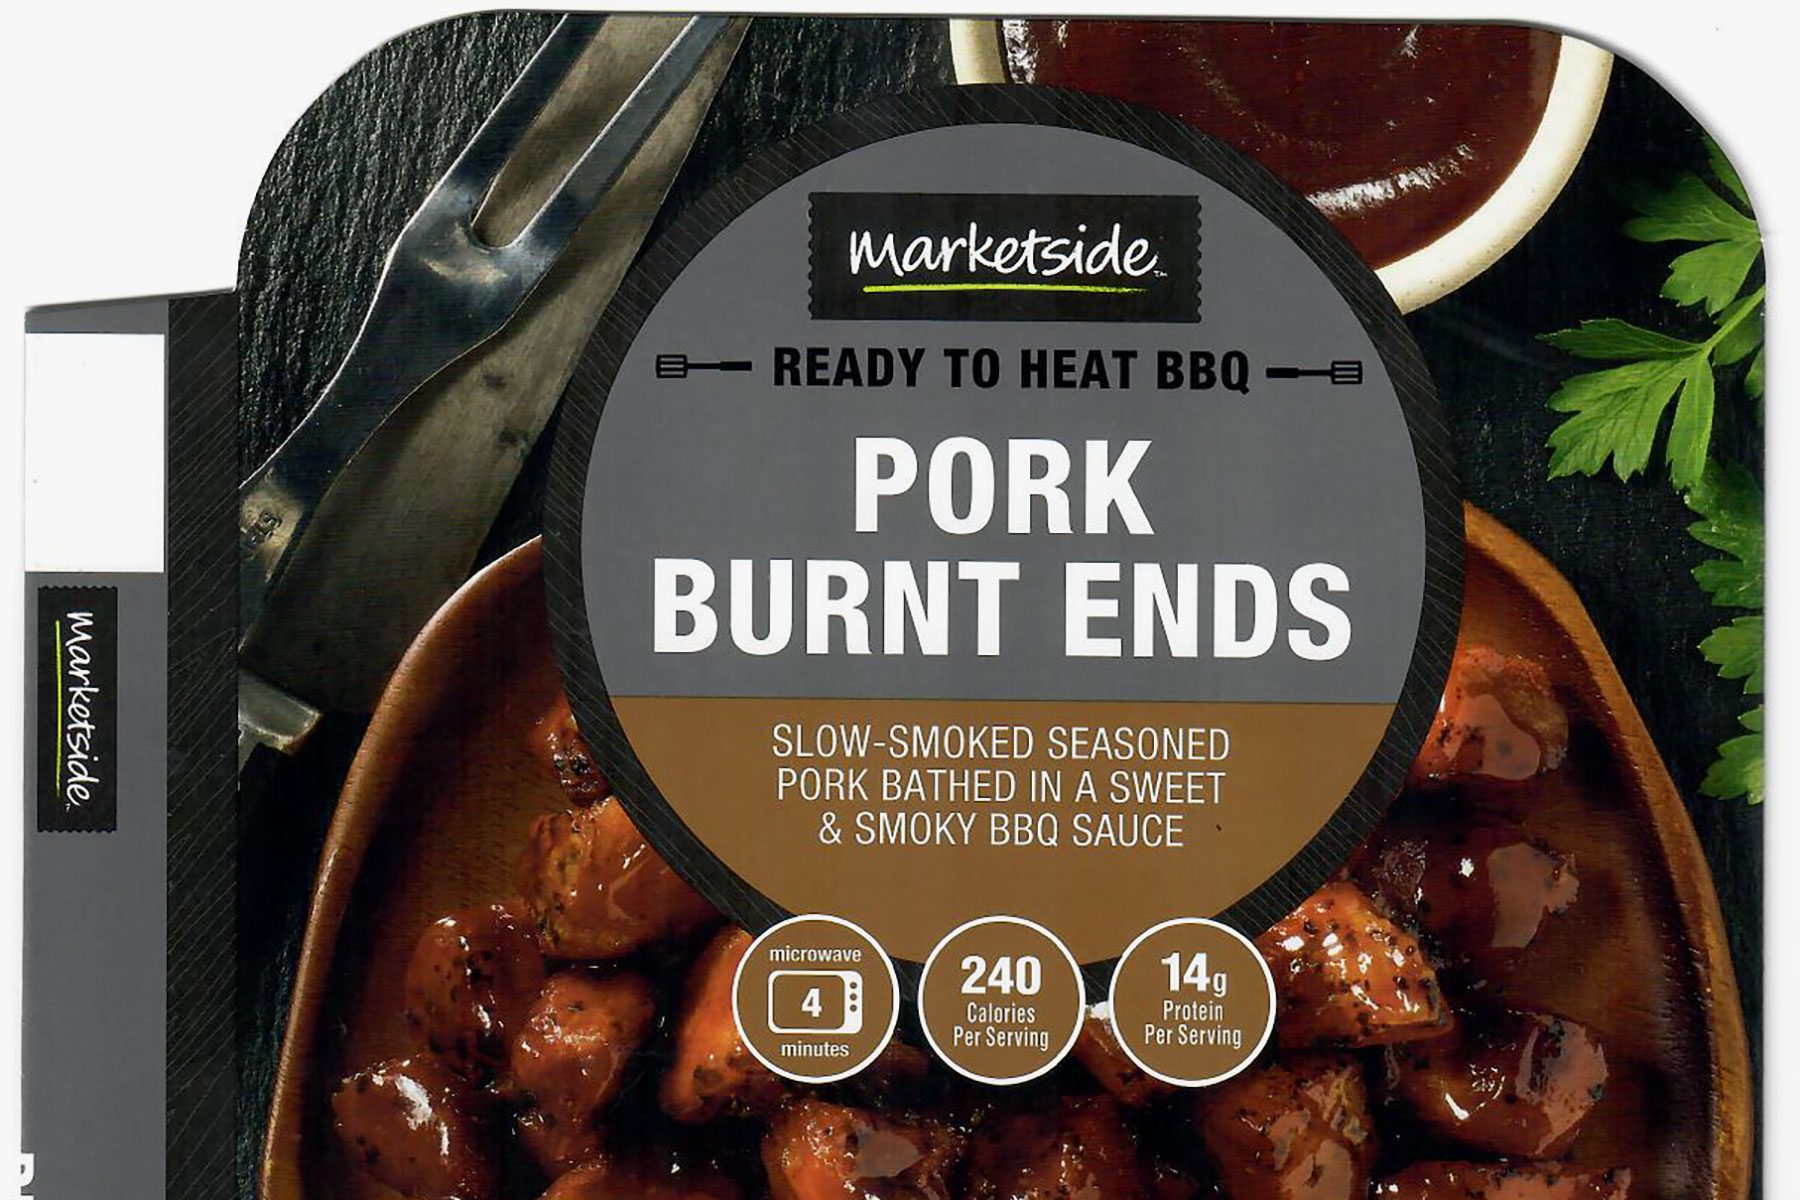 Marketside Pork Burnt Ends Recall Label Courtesy USDA